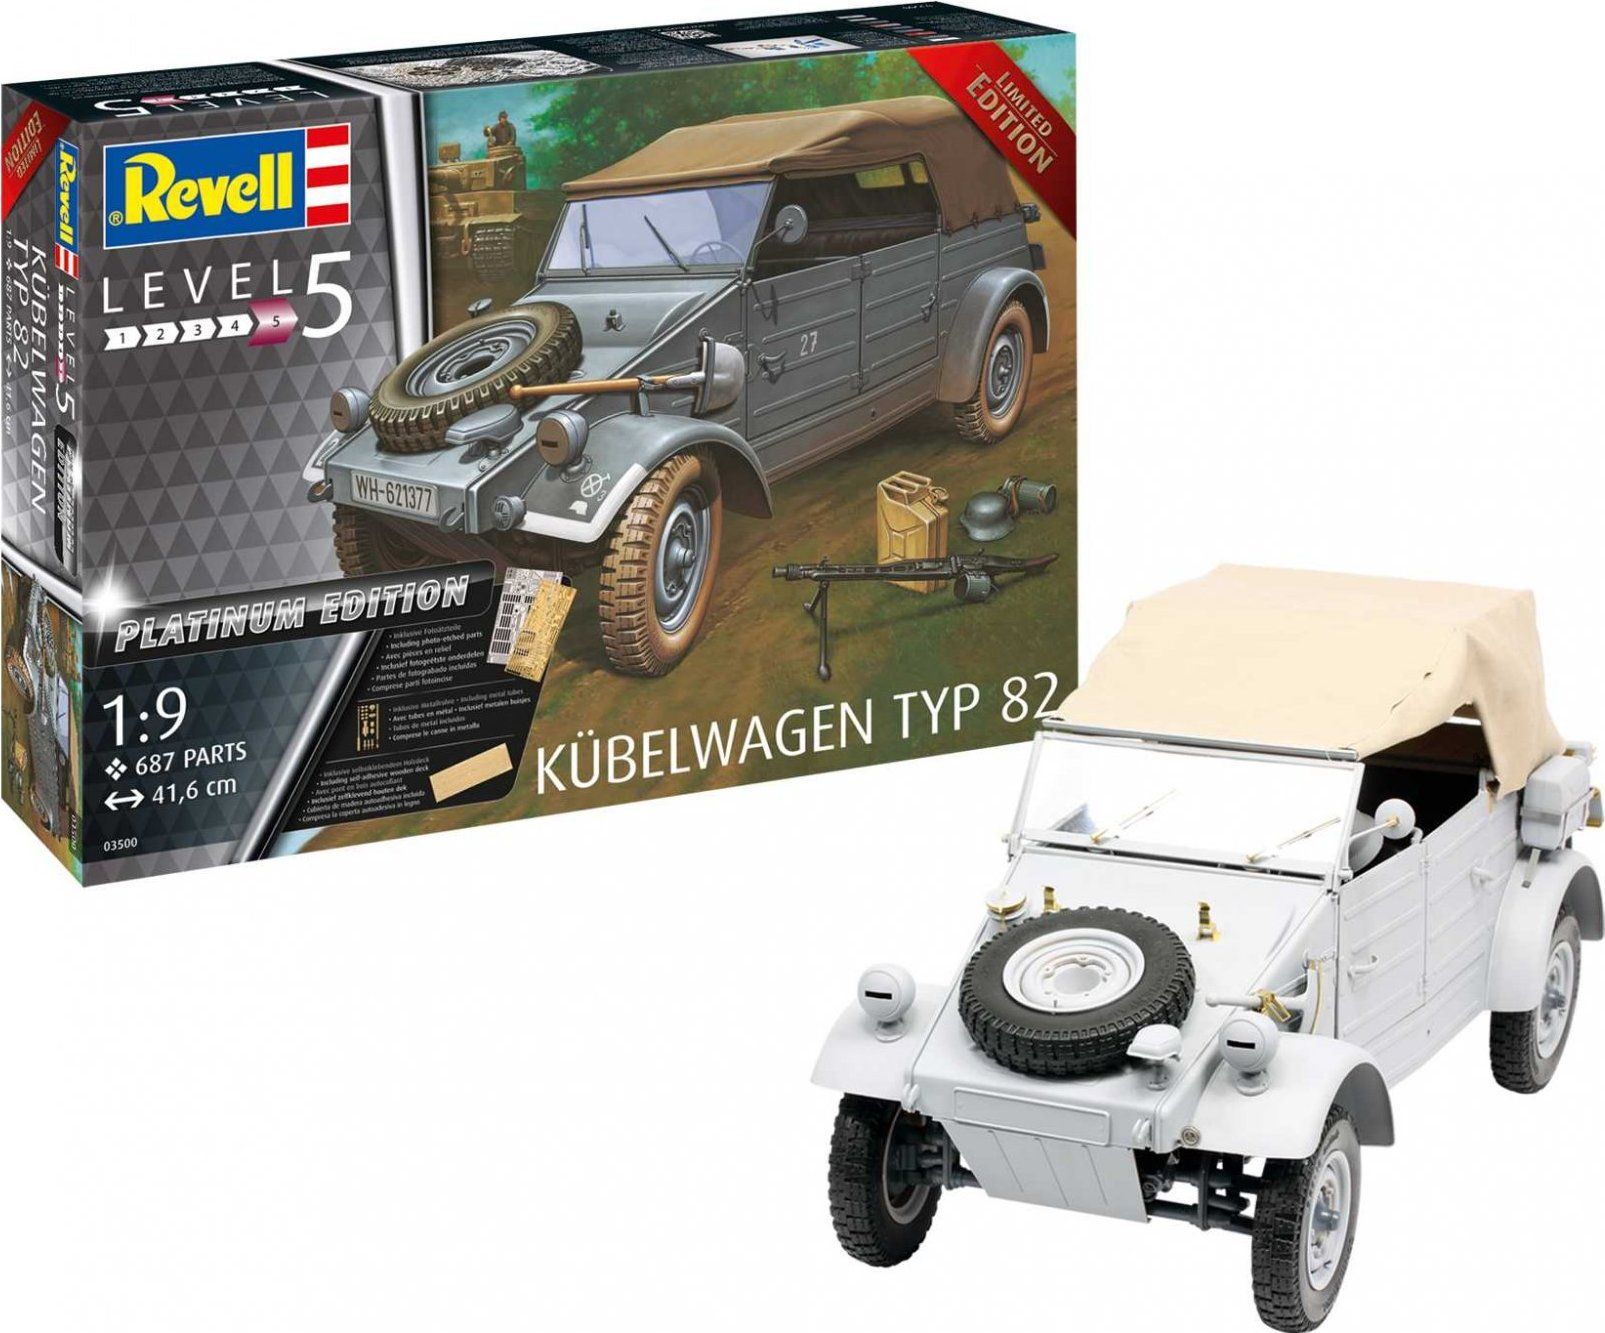 REVELL Plastic ModelKit military Limited Edition 03500 - Kübelwagen Typ 82 Platinum Edition (1:9) - obrázek 1